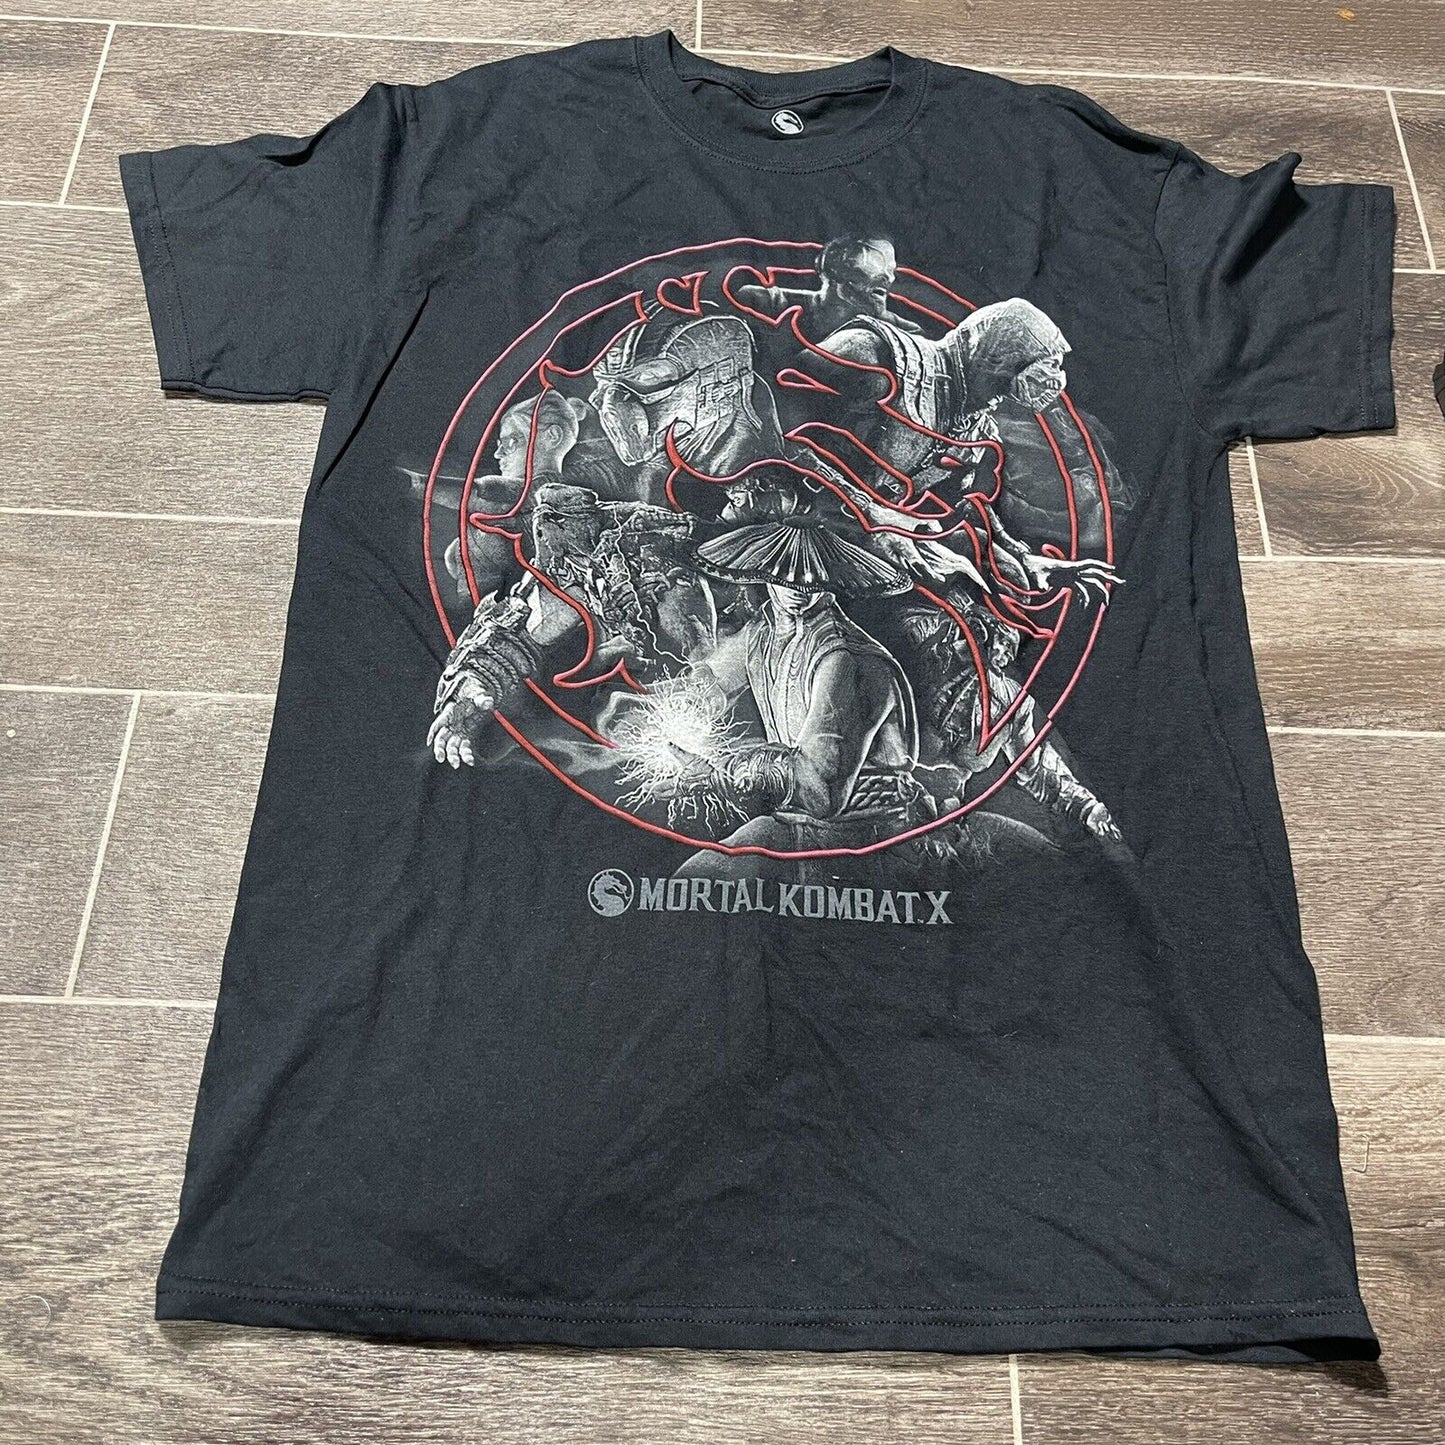 Men's Black Mortal Kombat X Charatcter Graphic Short Sleeve Cotton Shirt Size M